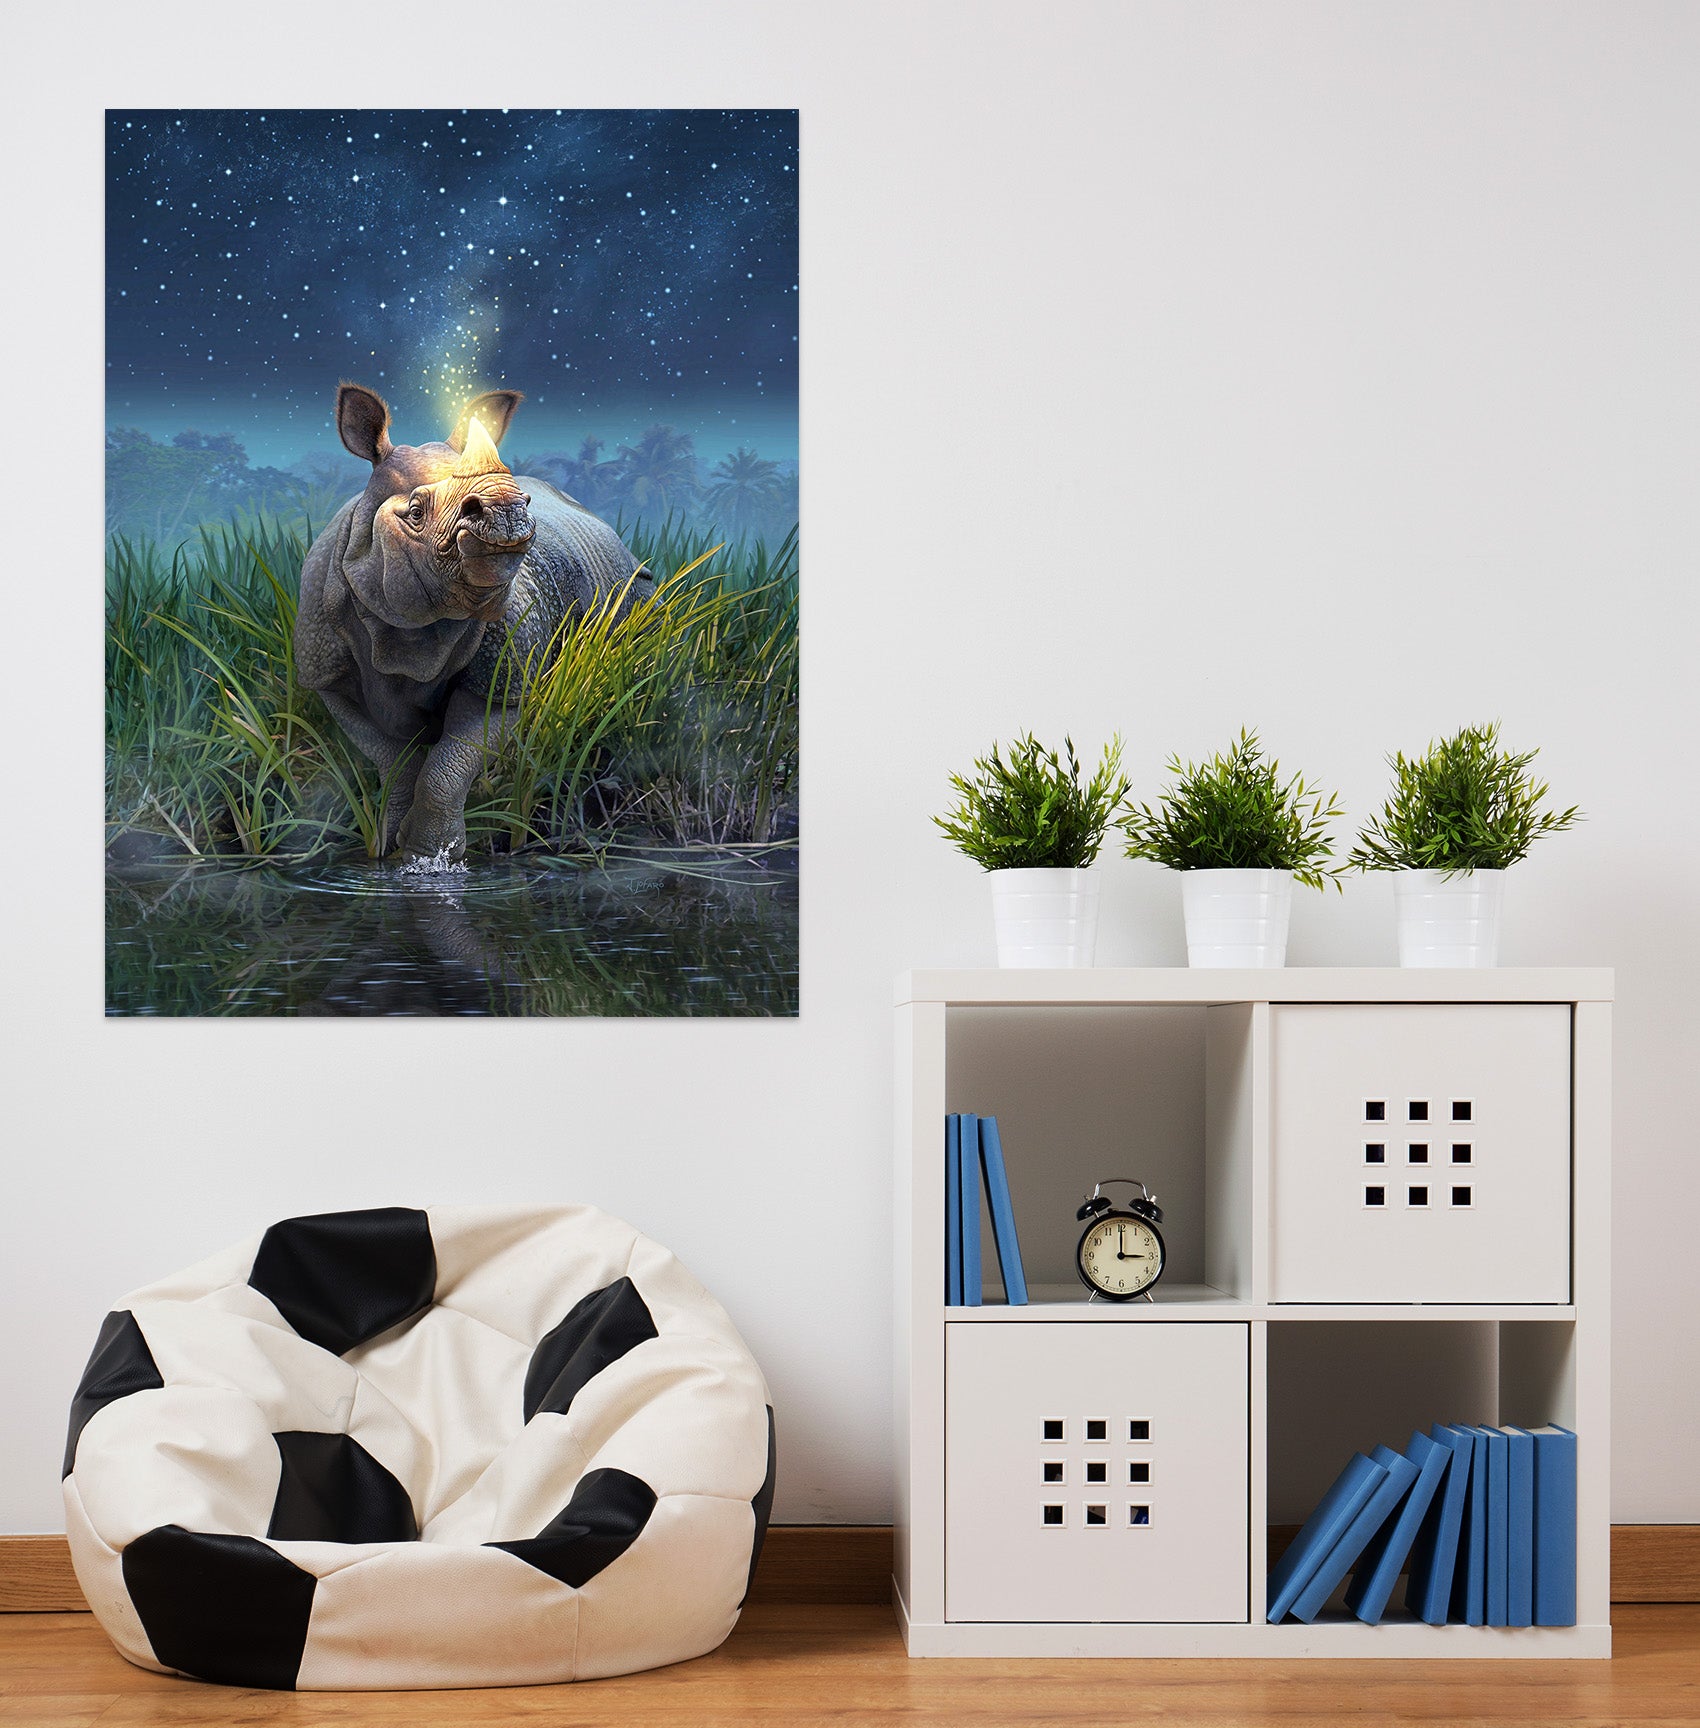 3D Rhinoceros Unicornis 85202 Jerry LoFaro Wall Sticker